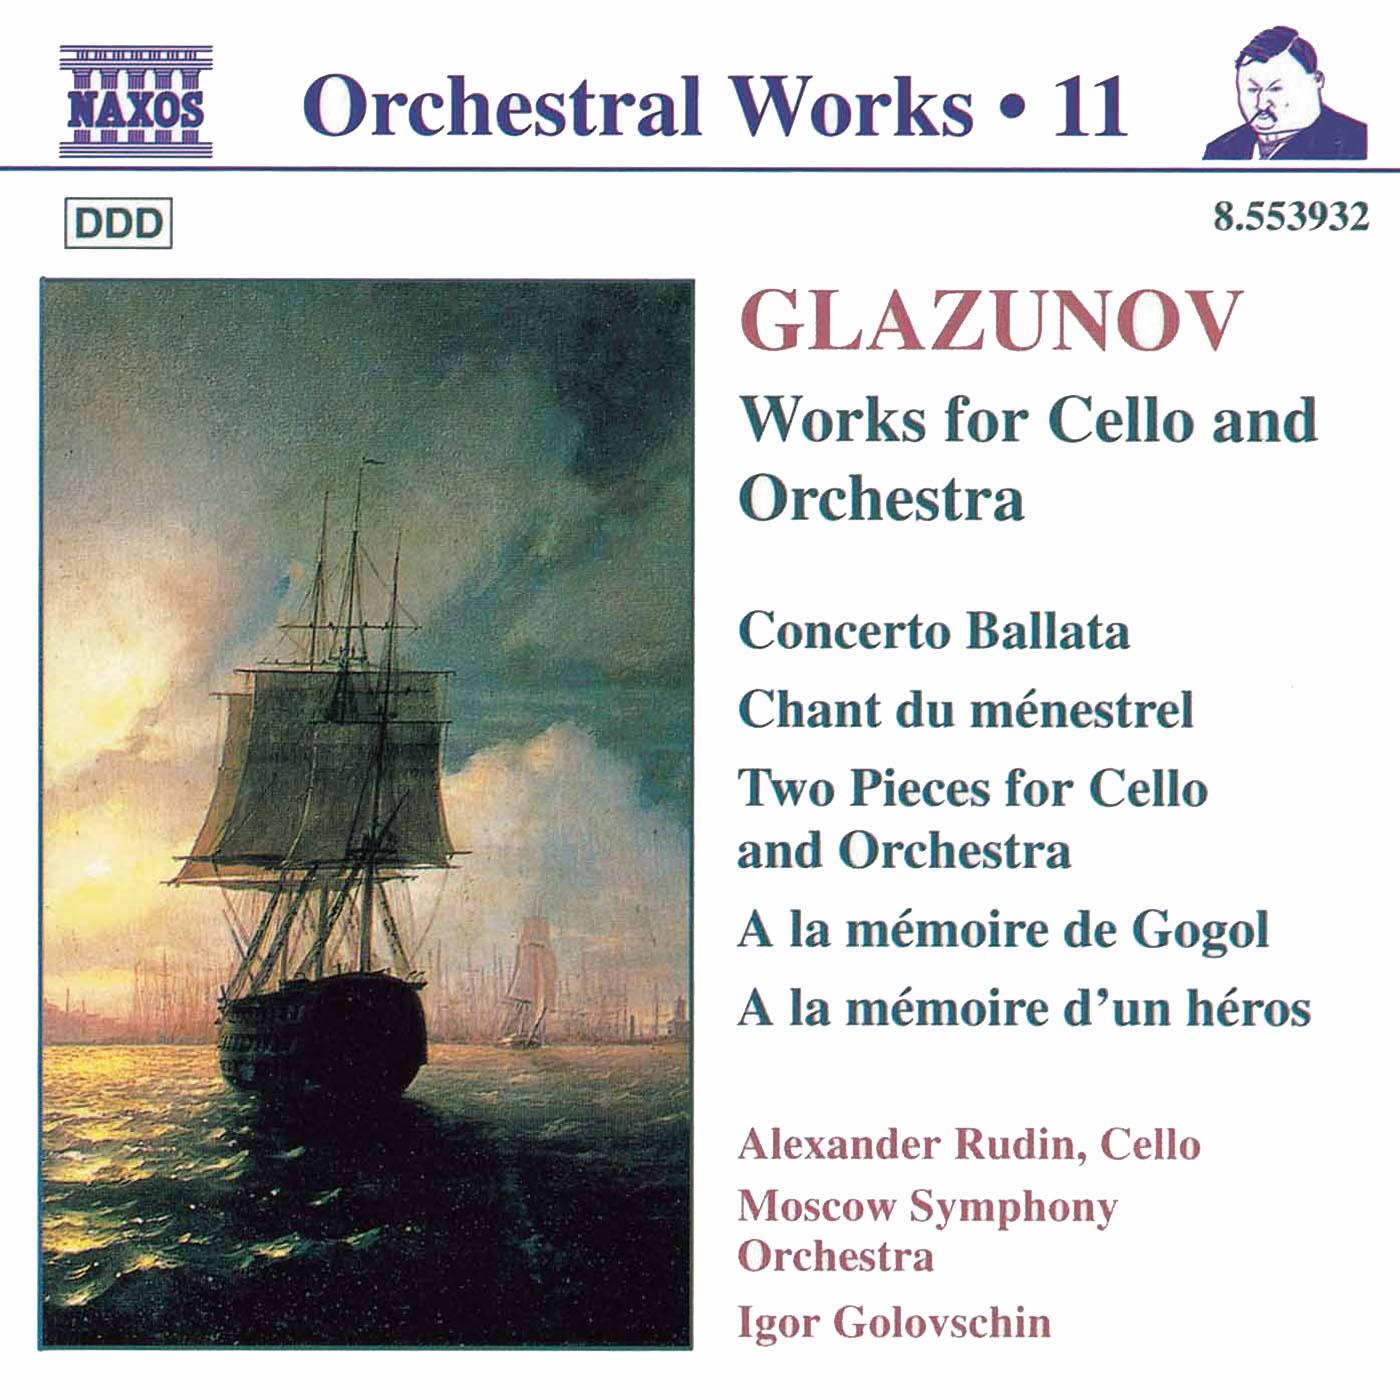 GLAZUNOV, A.K.: Orchestral Works, Vol. 11 - Concerto Ballata / Chant du menestrel (Rudin, Moscow Symphony, Golovschin)